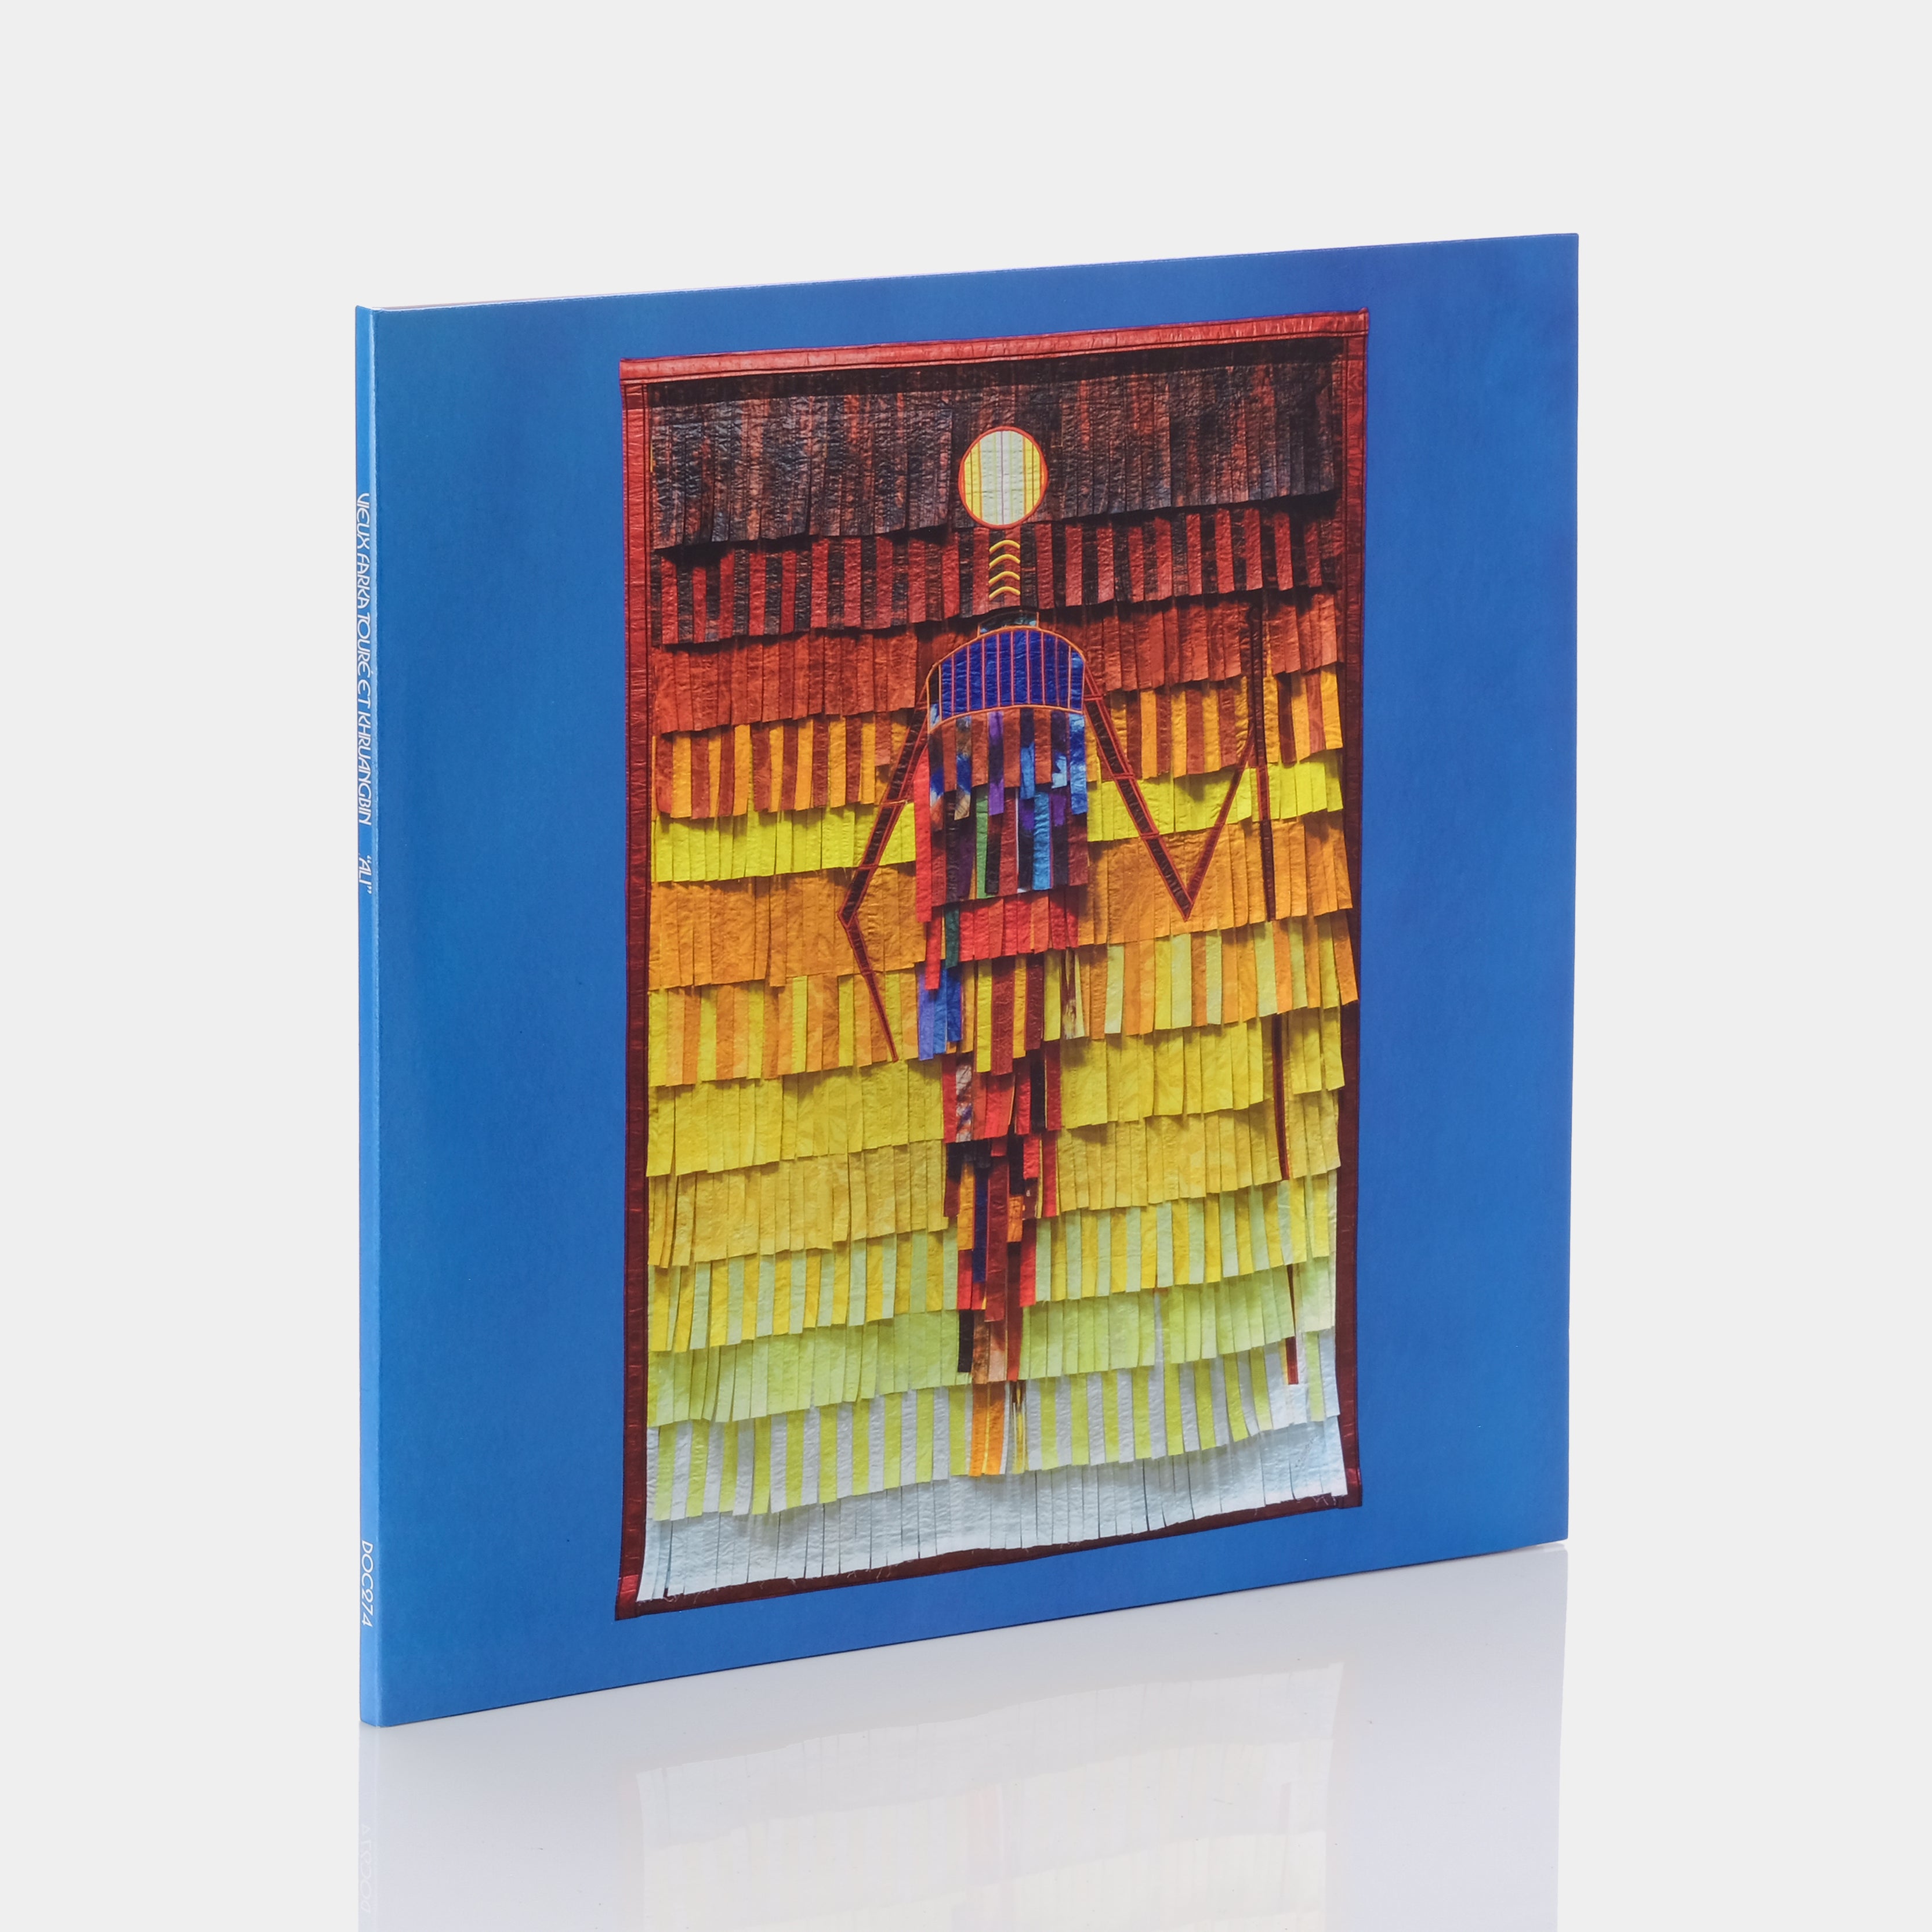 Vieux Farka Touré Et Khruangbin - Ali LP Jade Vinyl Record